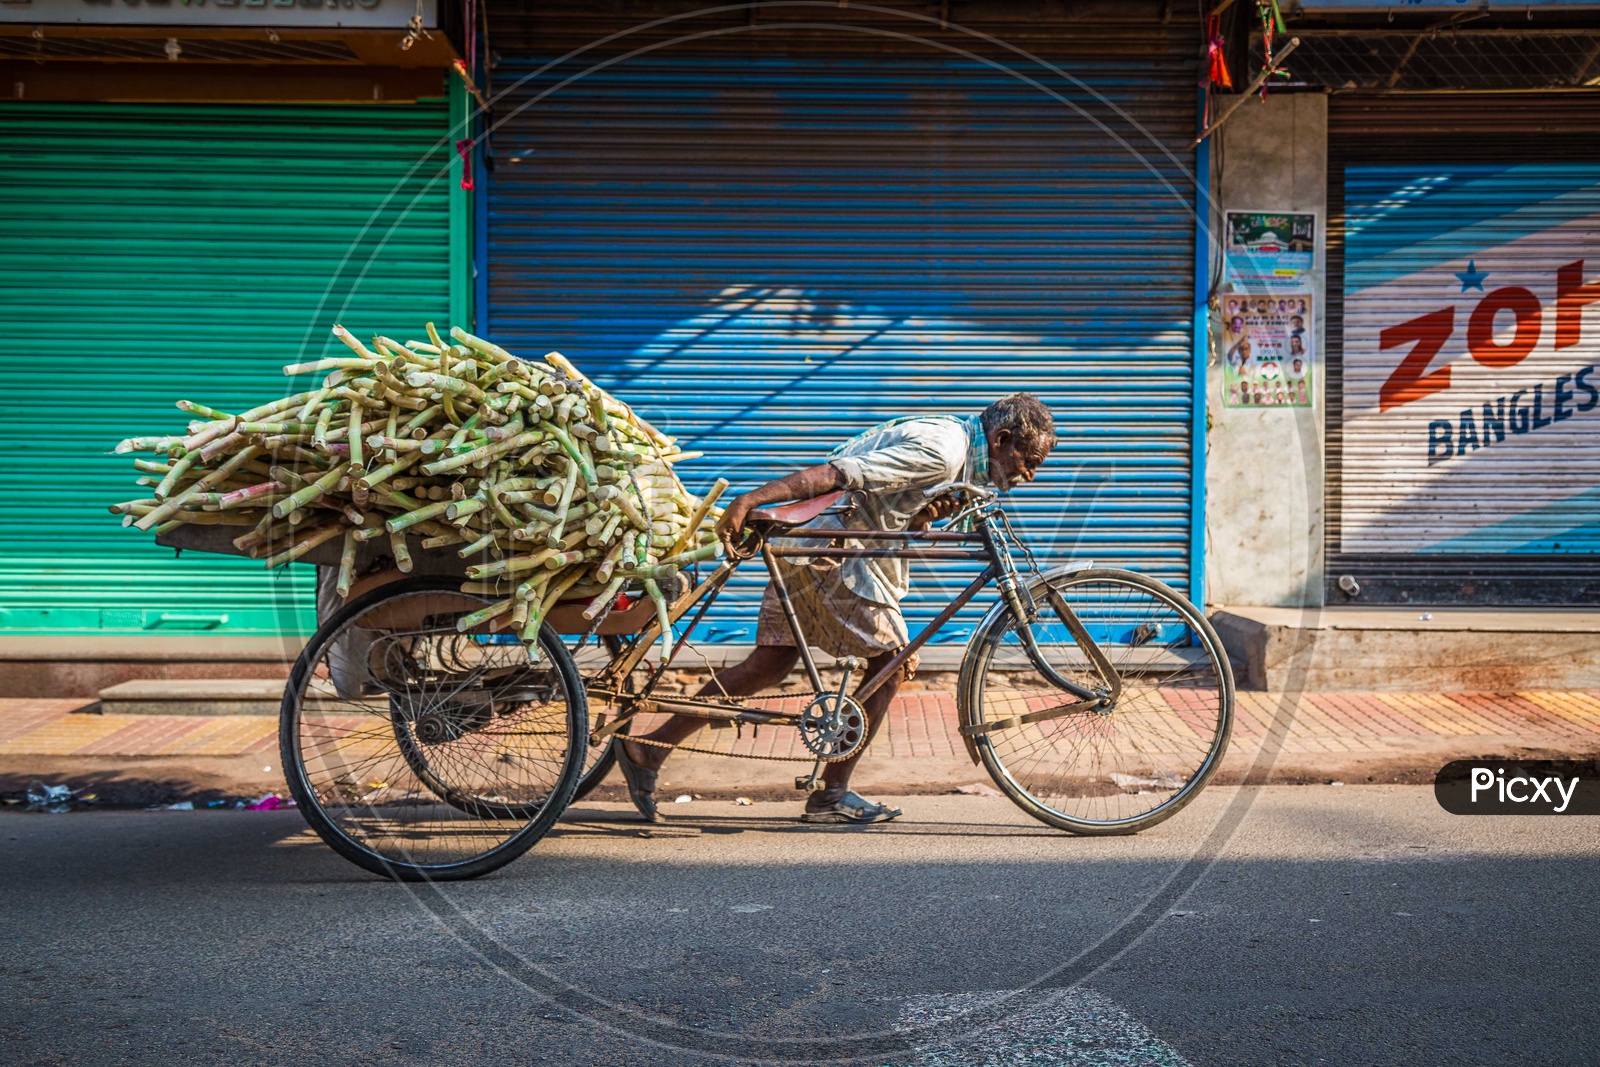 Rickshaw man carrying a load of sugarcanes on his rickshaw in a street